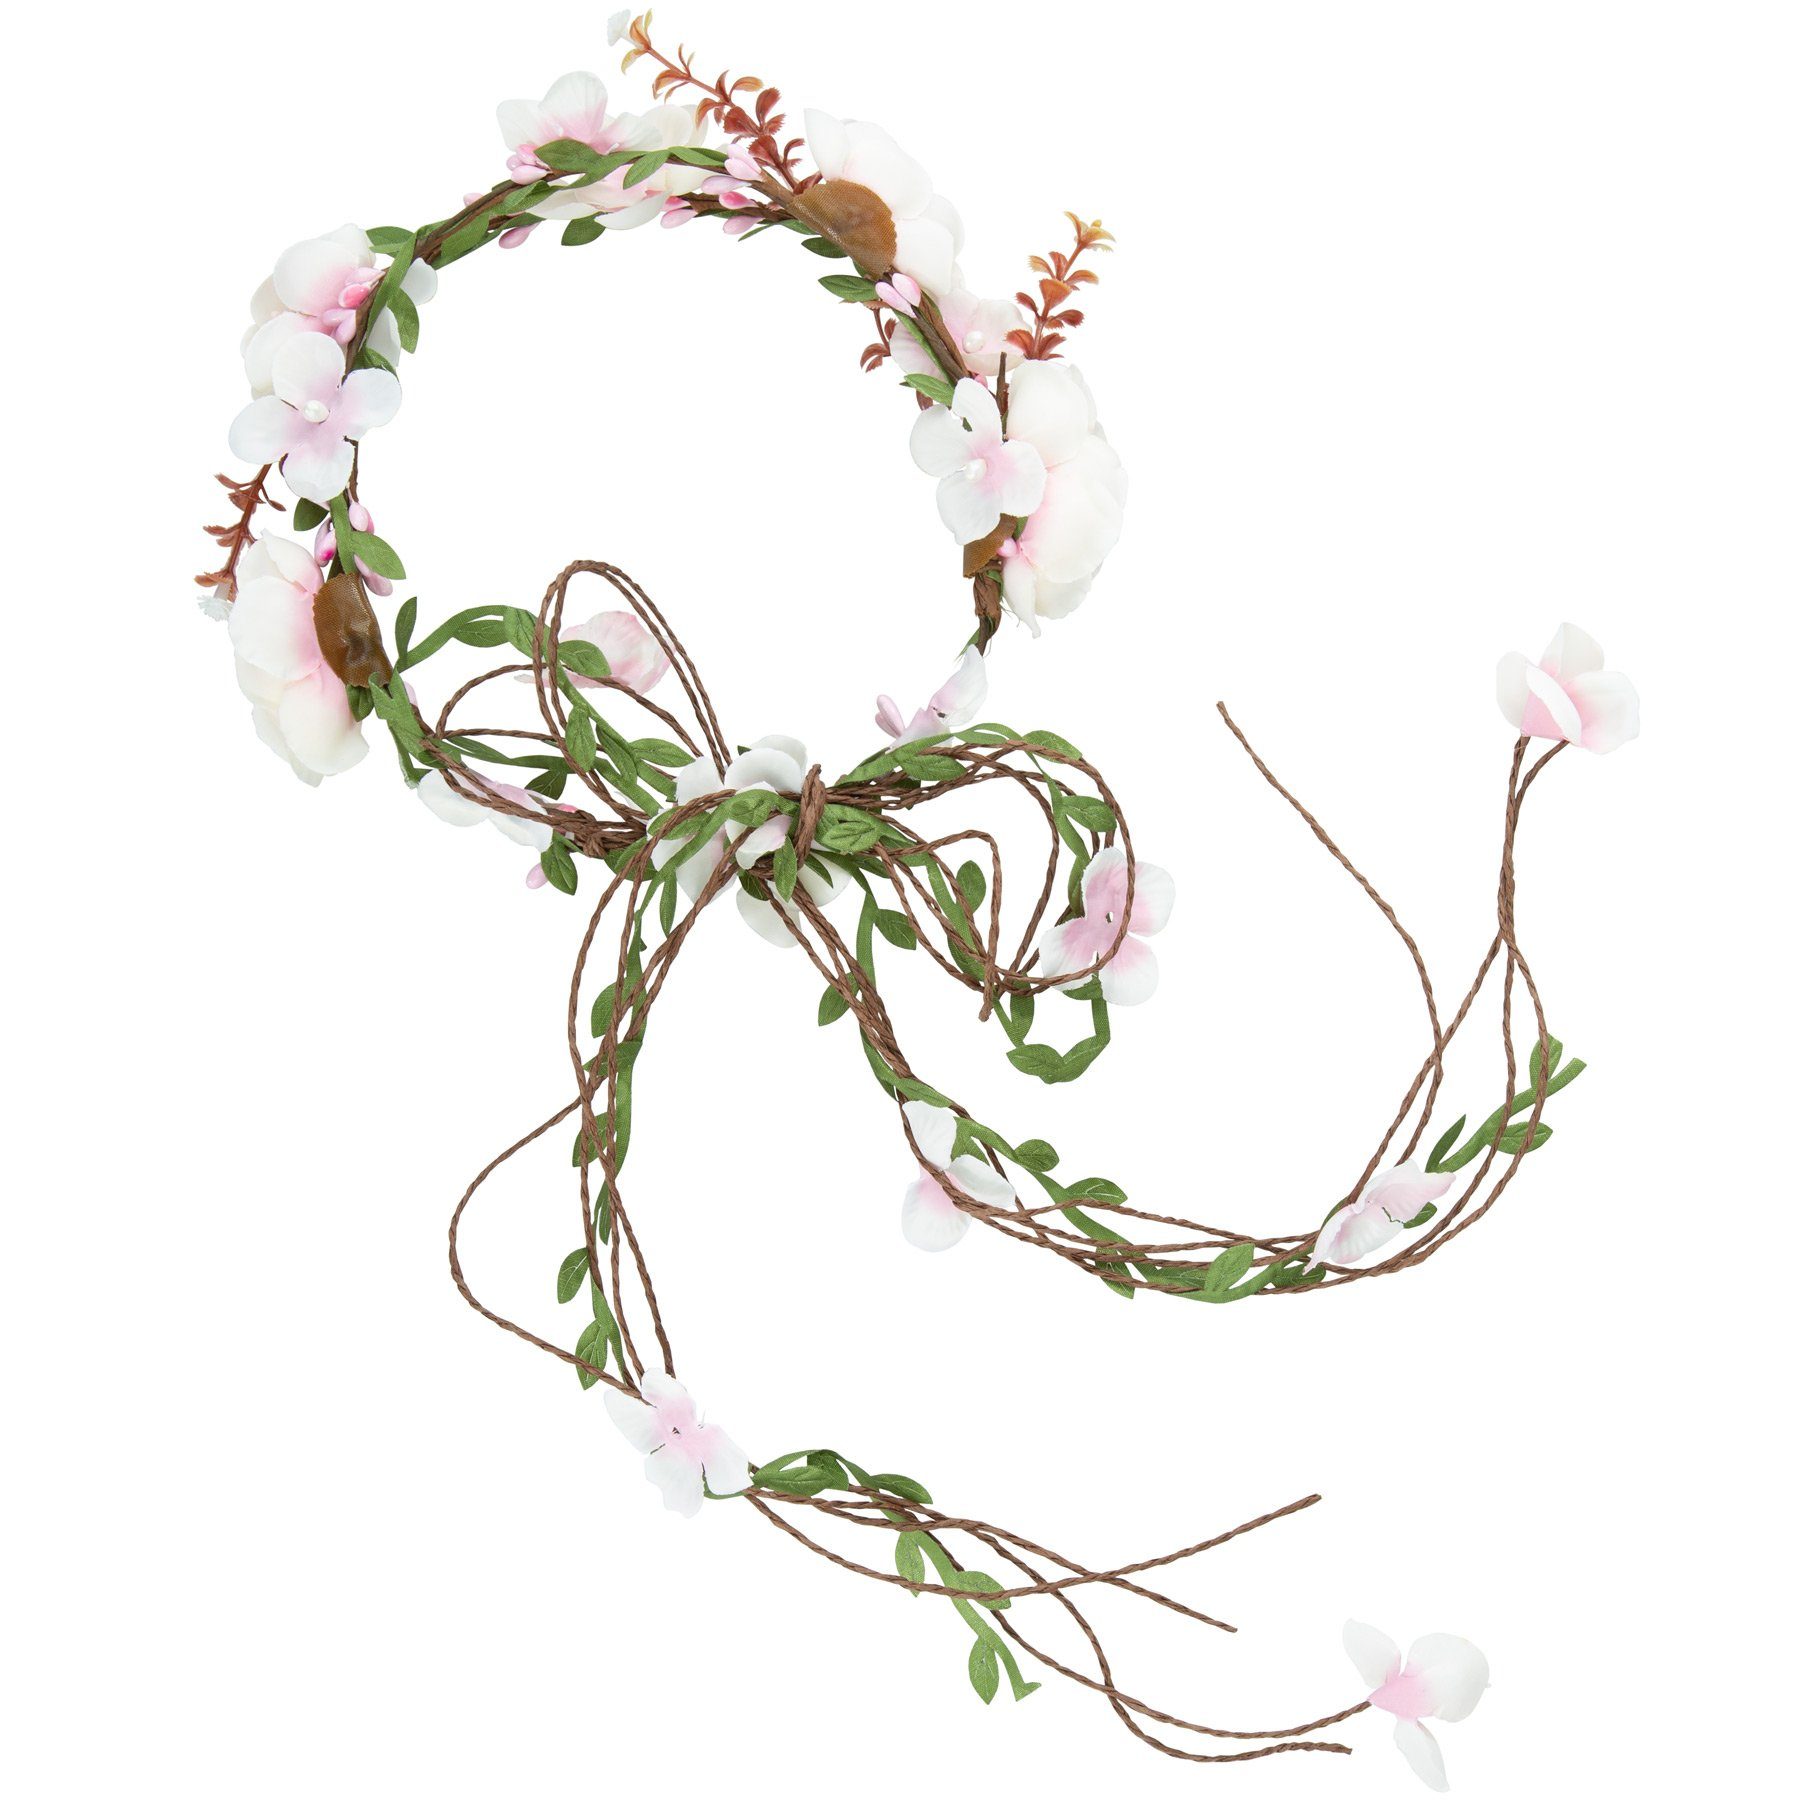 Blumenkranz Wiesenglück dressforfun Haarband